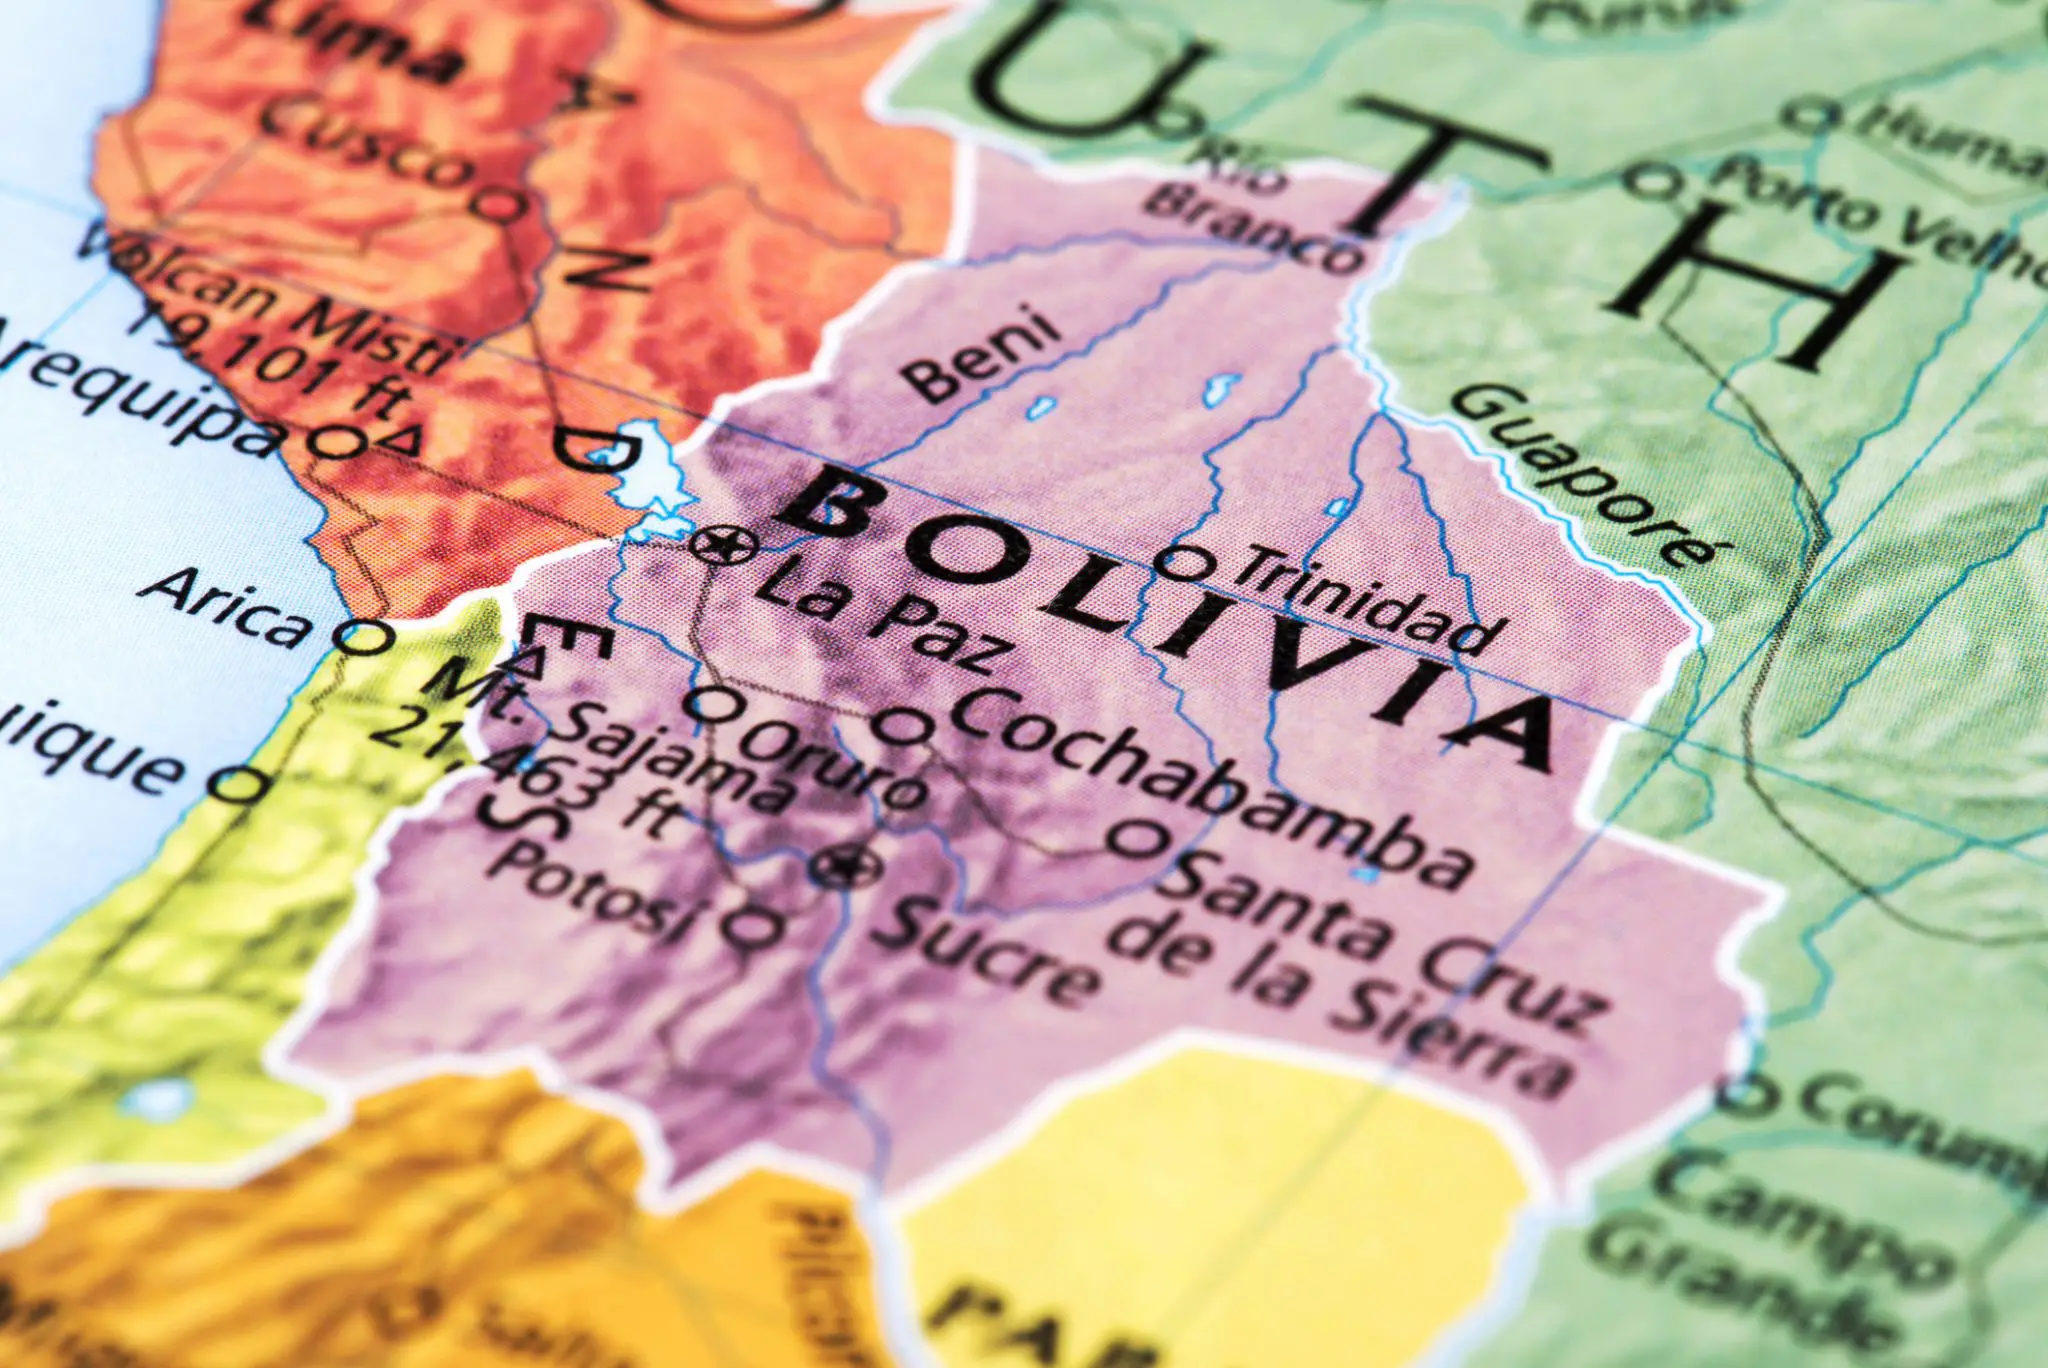 Map of Bolivia.